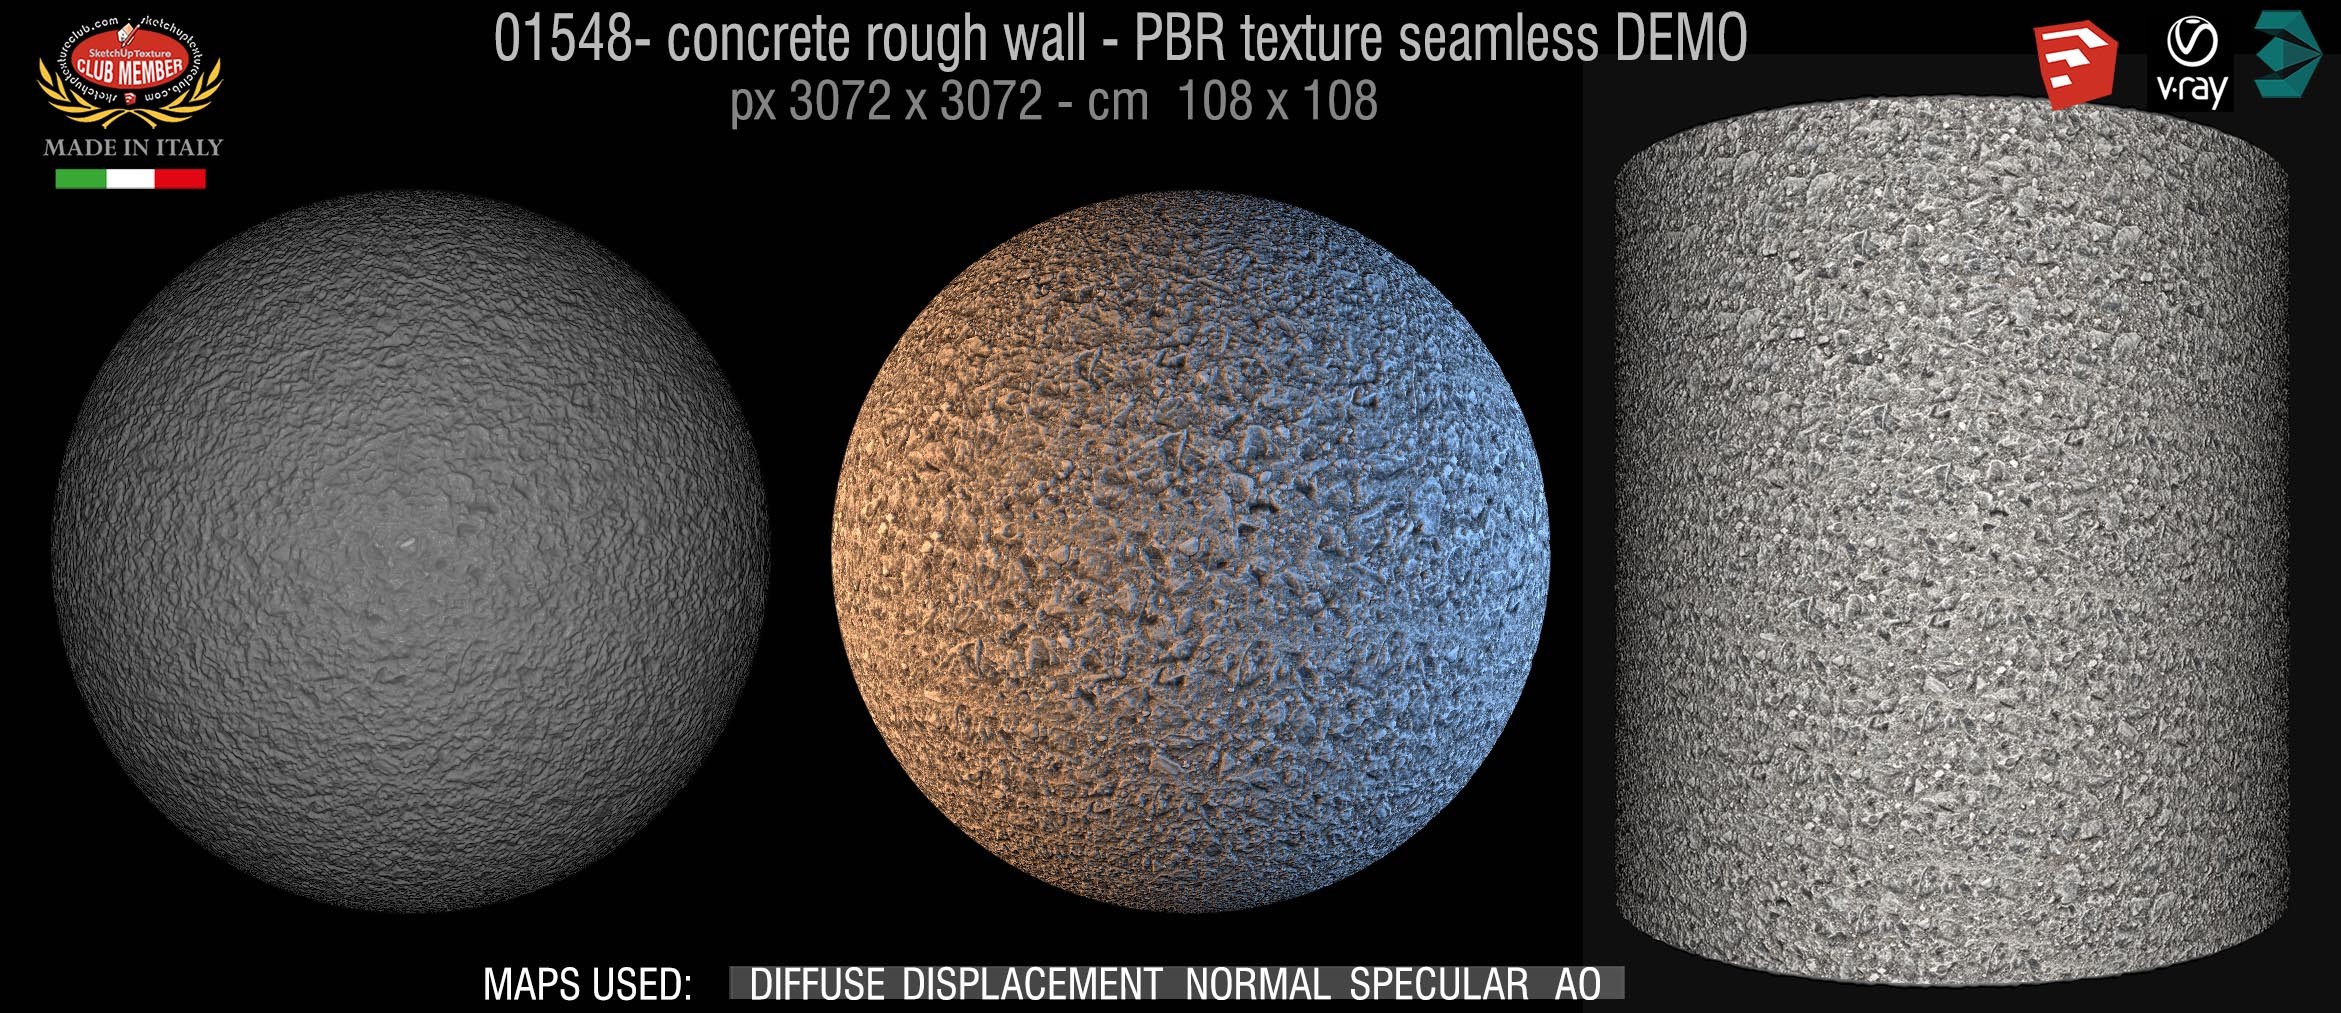 01548 concrete rough wall PBR texture seamless DEMO